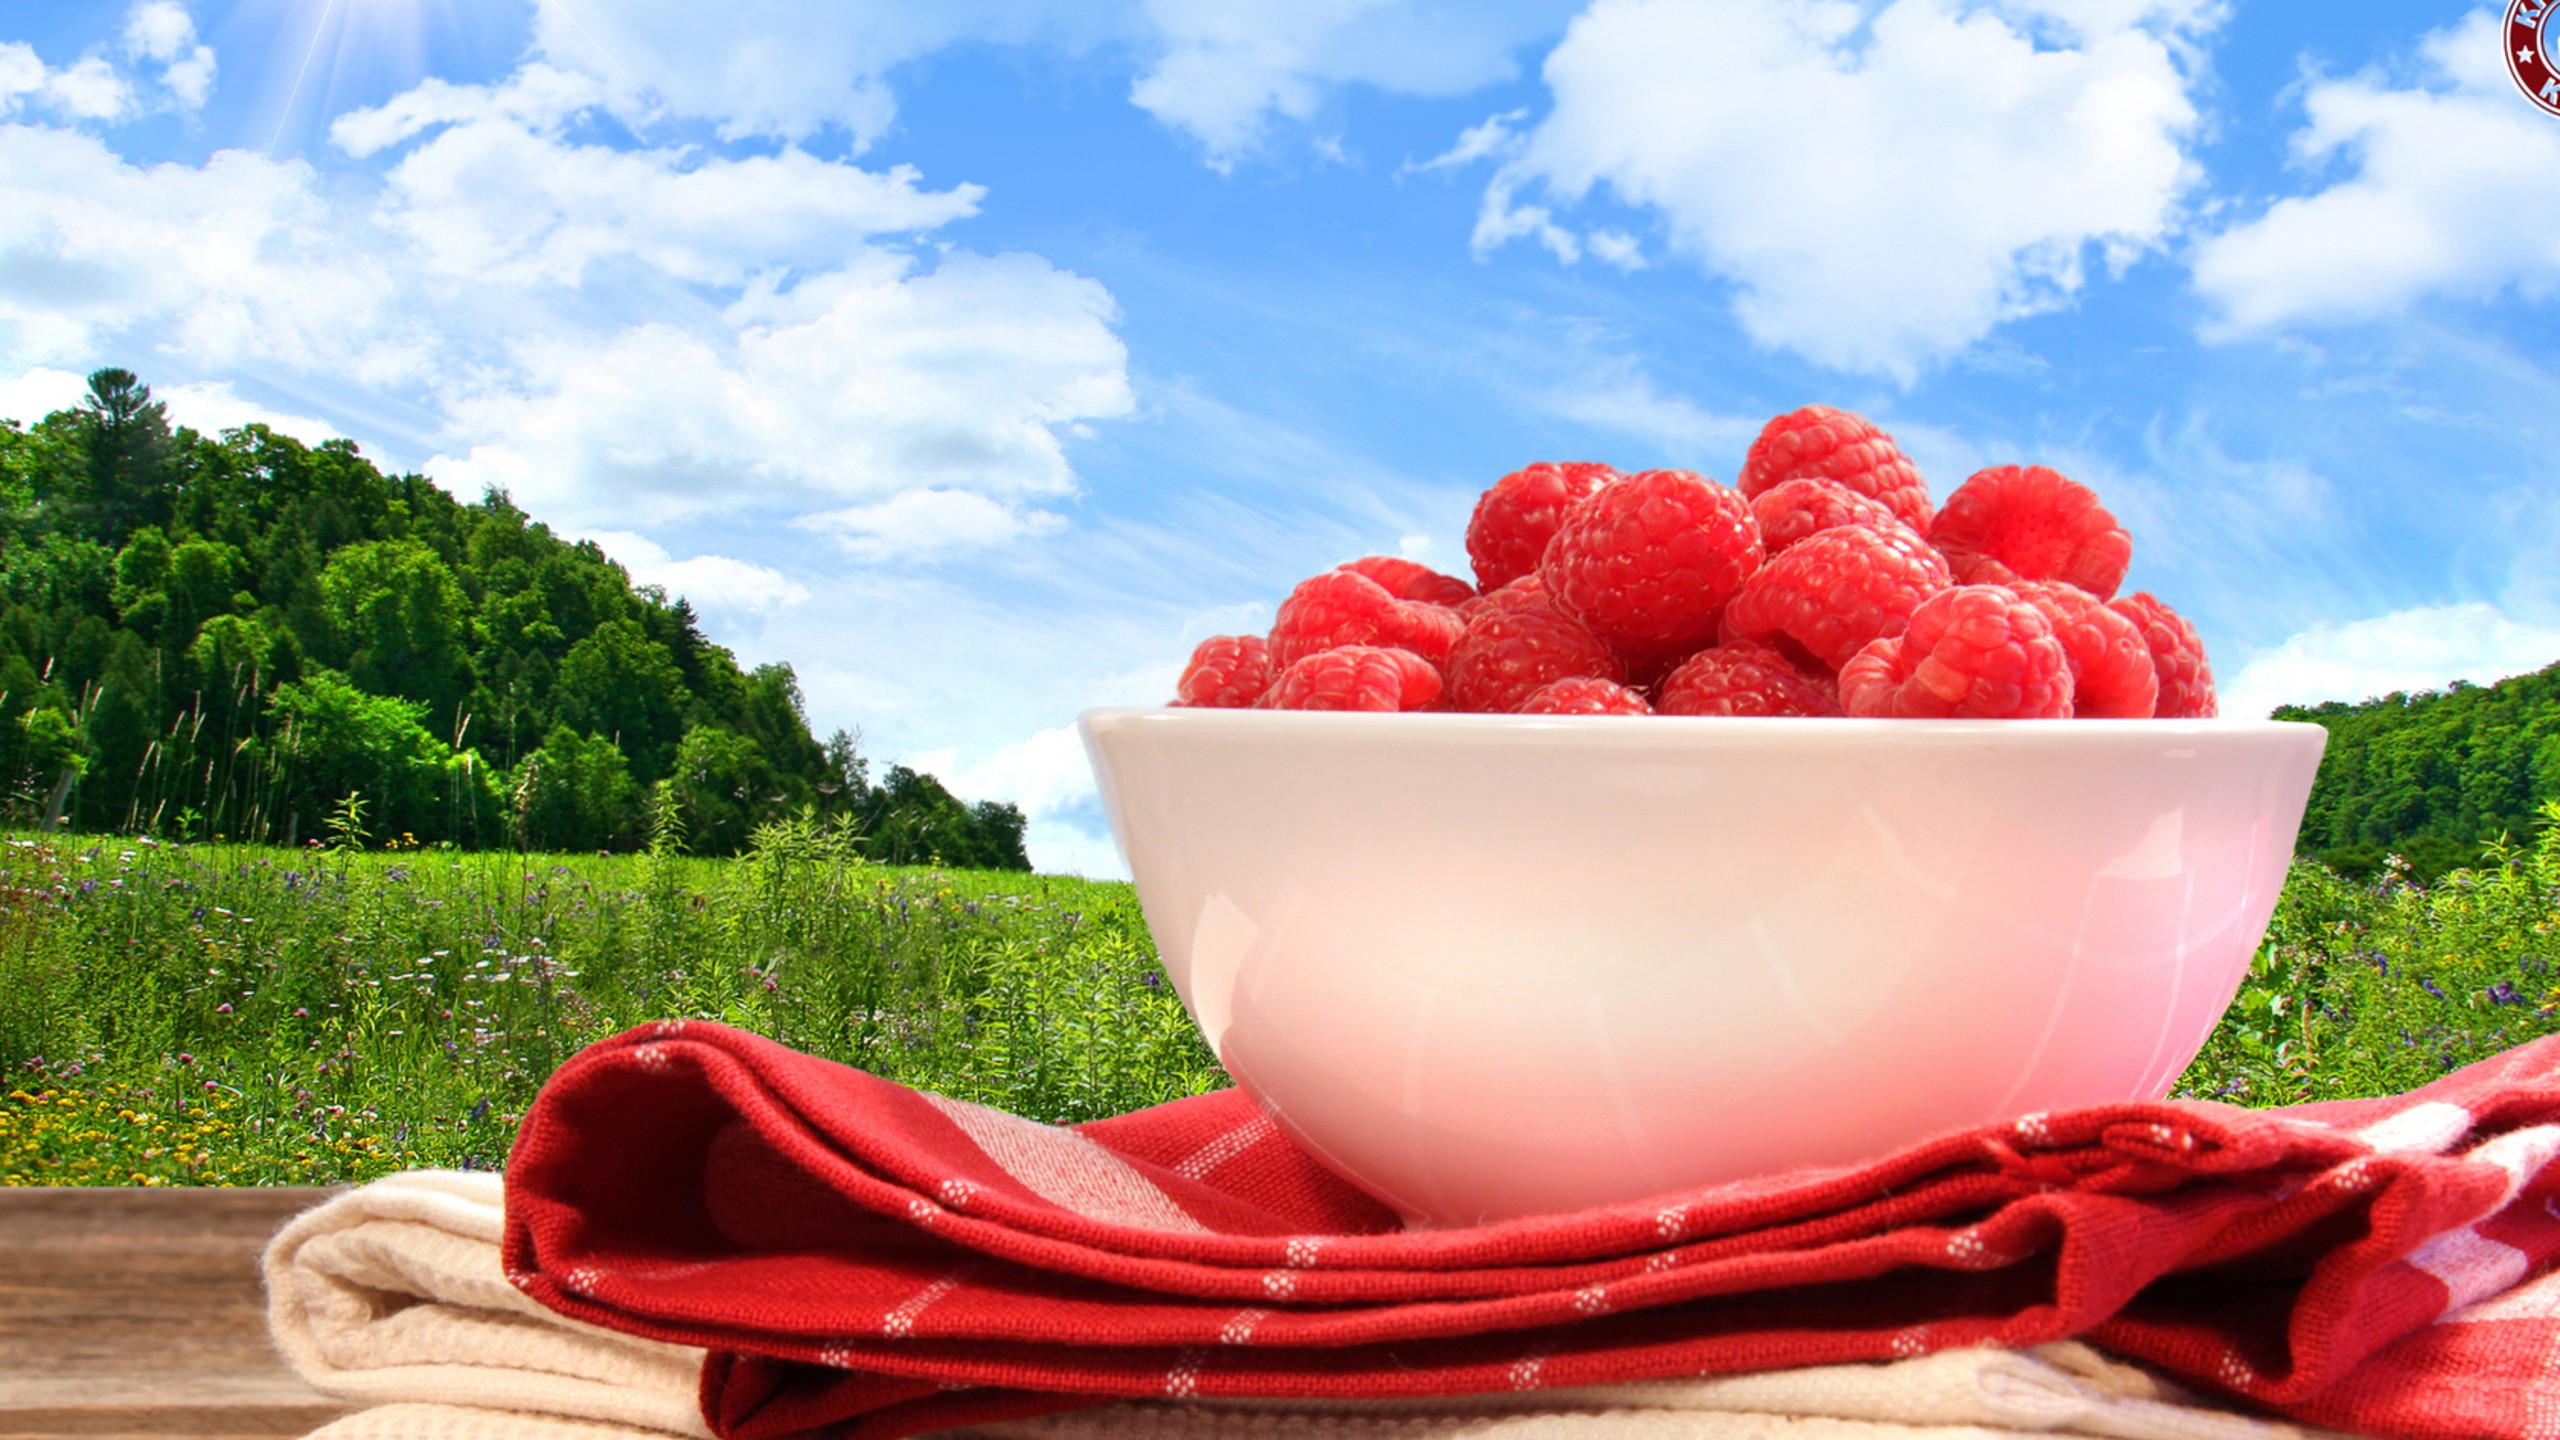 General 2560x1440 food bowls fruit berries outdoors